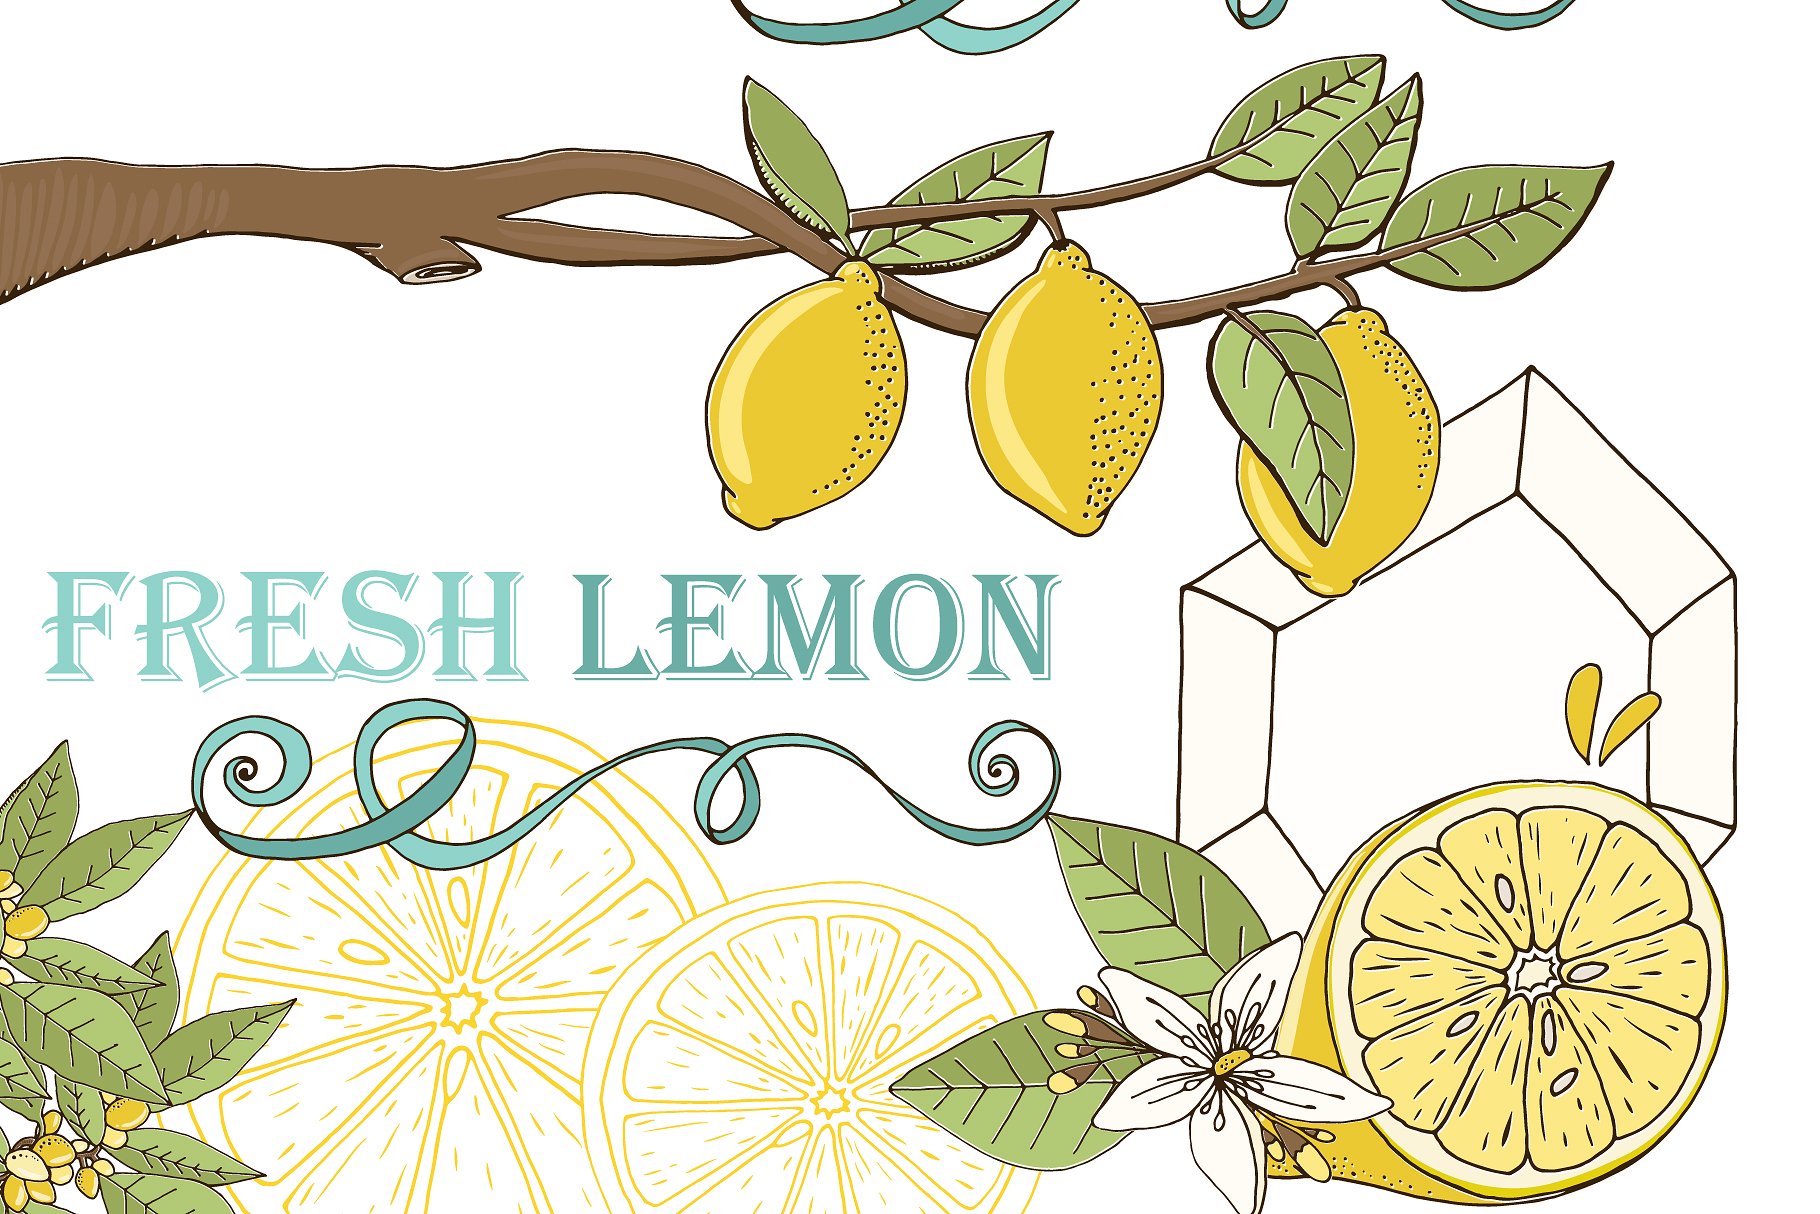 新鲜夏天柠檬插图合集 Lemons, Summer Fruit Illustrations插图(4)